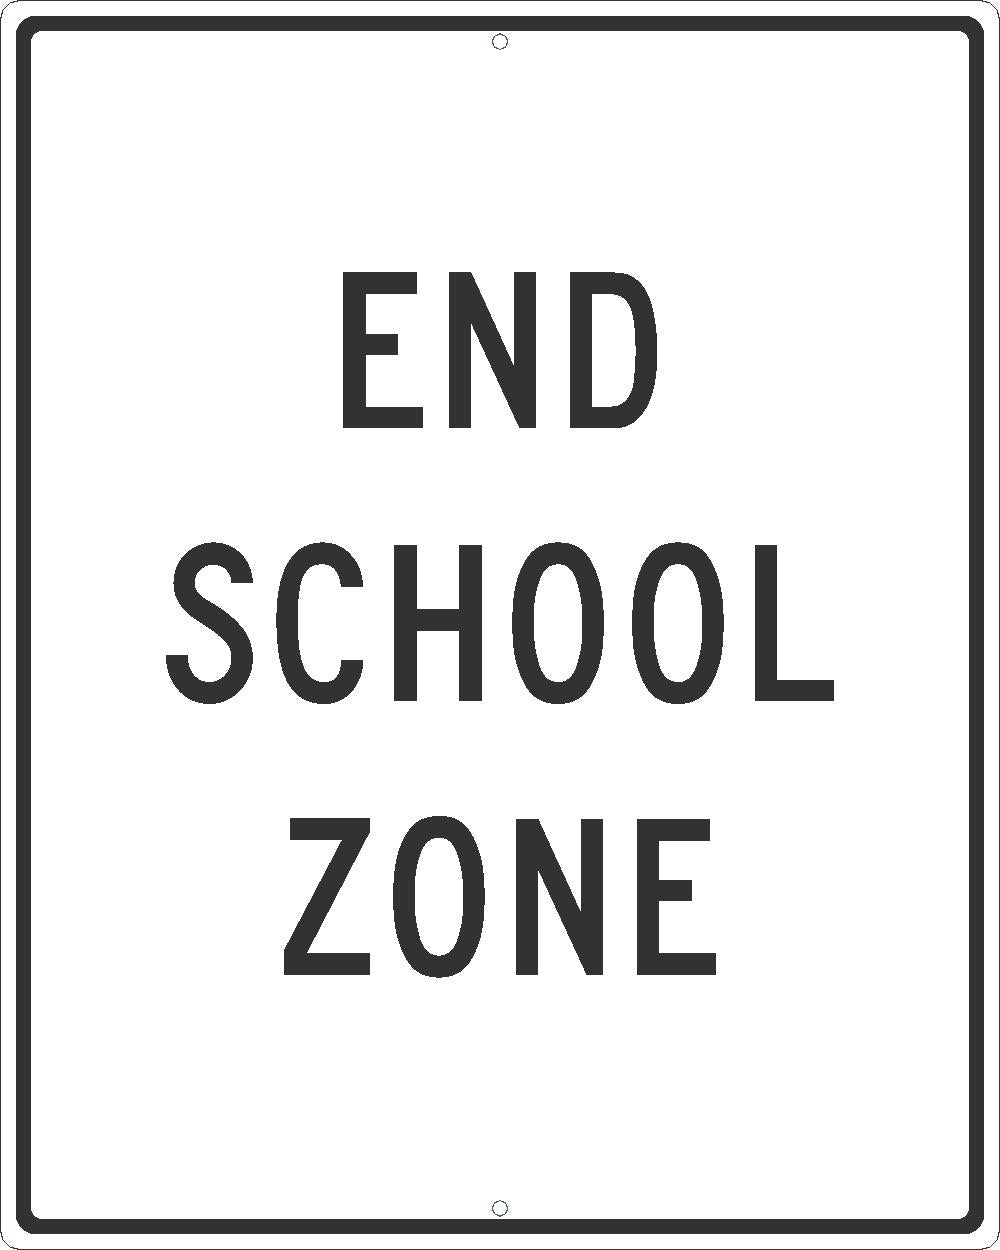 END SCHOOL ZONE SIGN, 30x24, .080 EGP REF ALUM